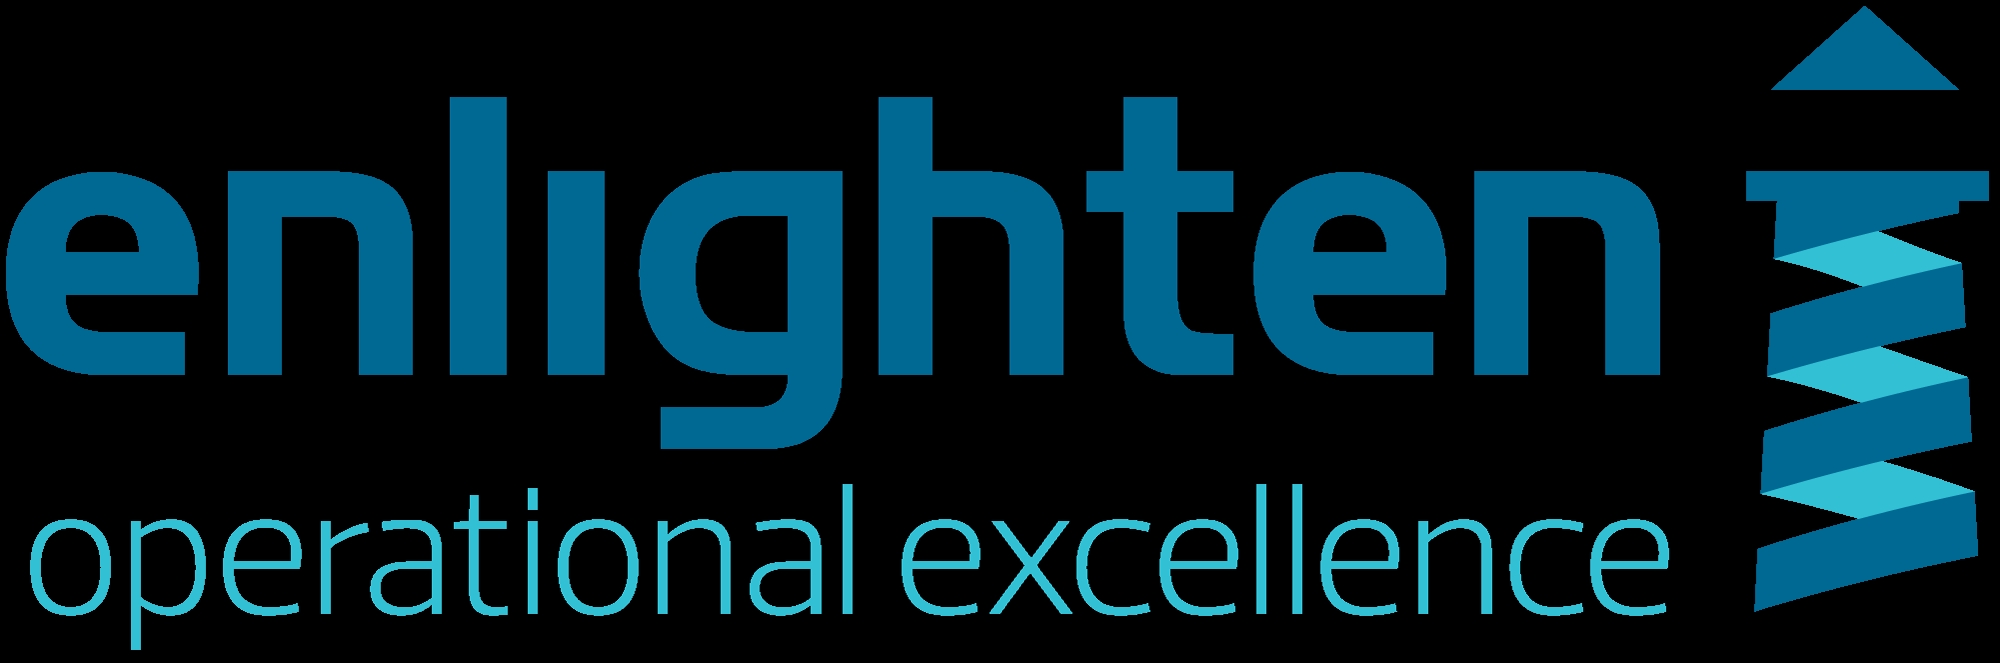 enlighten-operational-excellence-logo-color.png